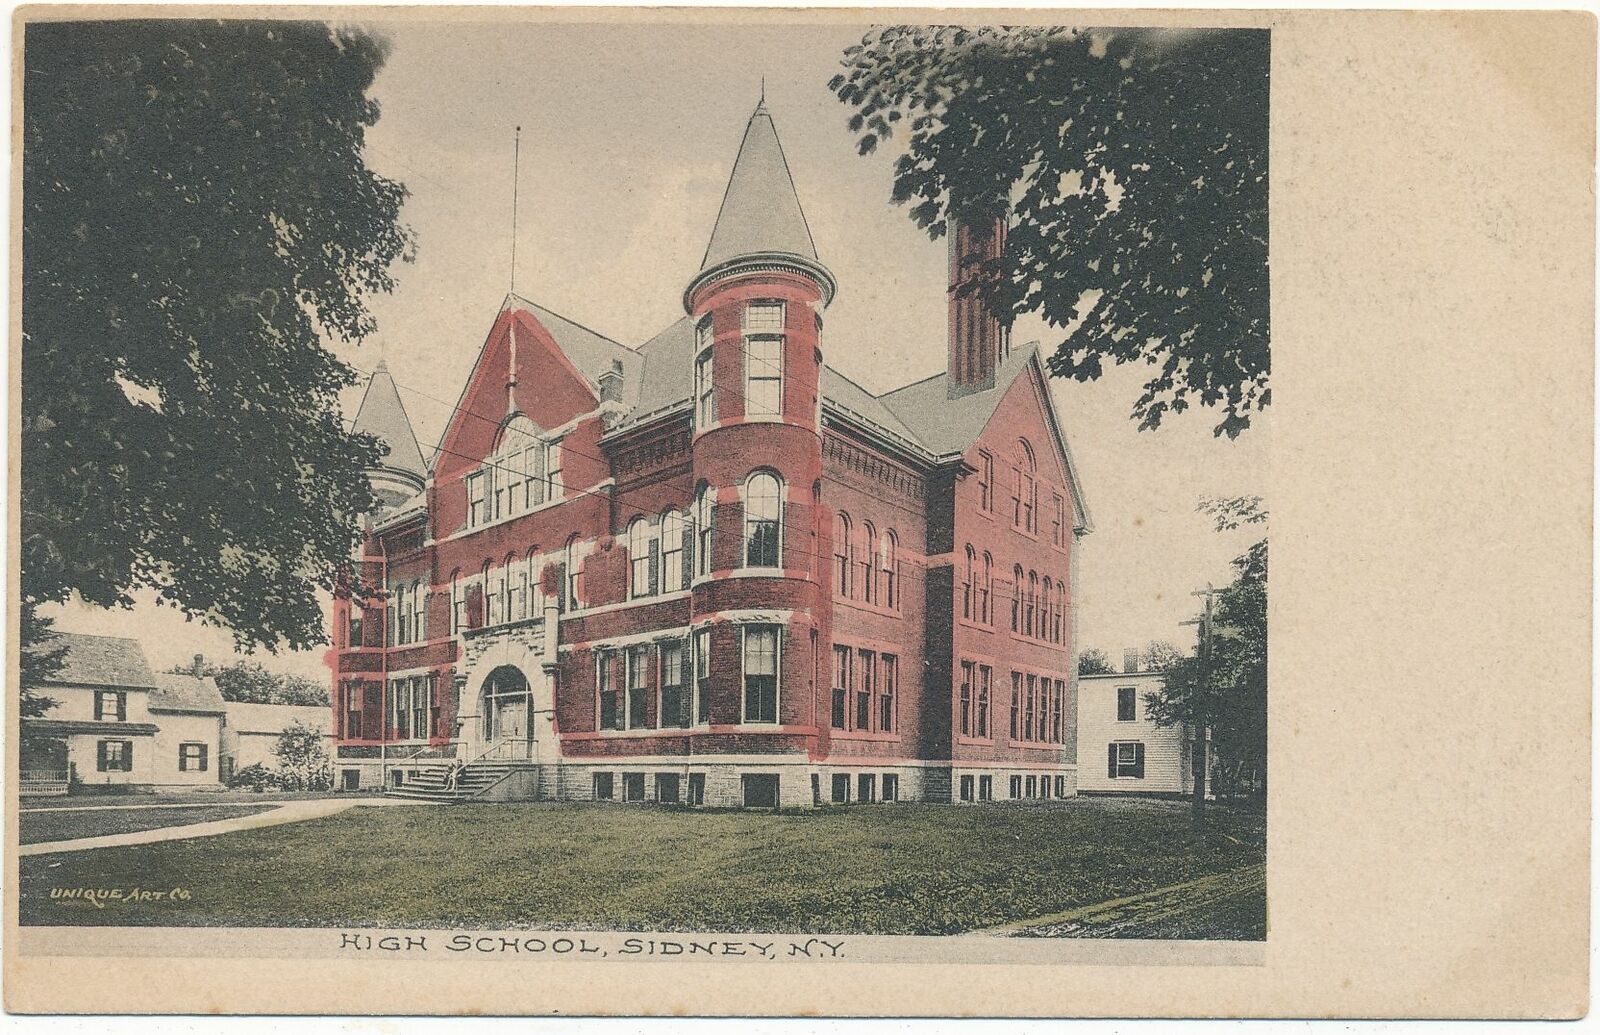 SIDNEY NY - High School - Hand Colored Postcard - udb (pre 1908)